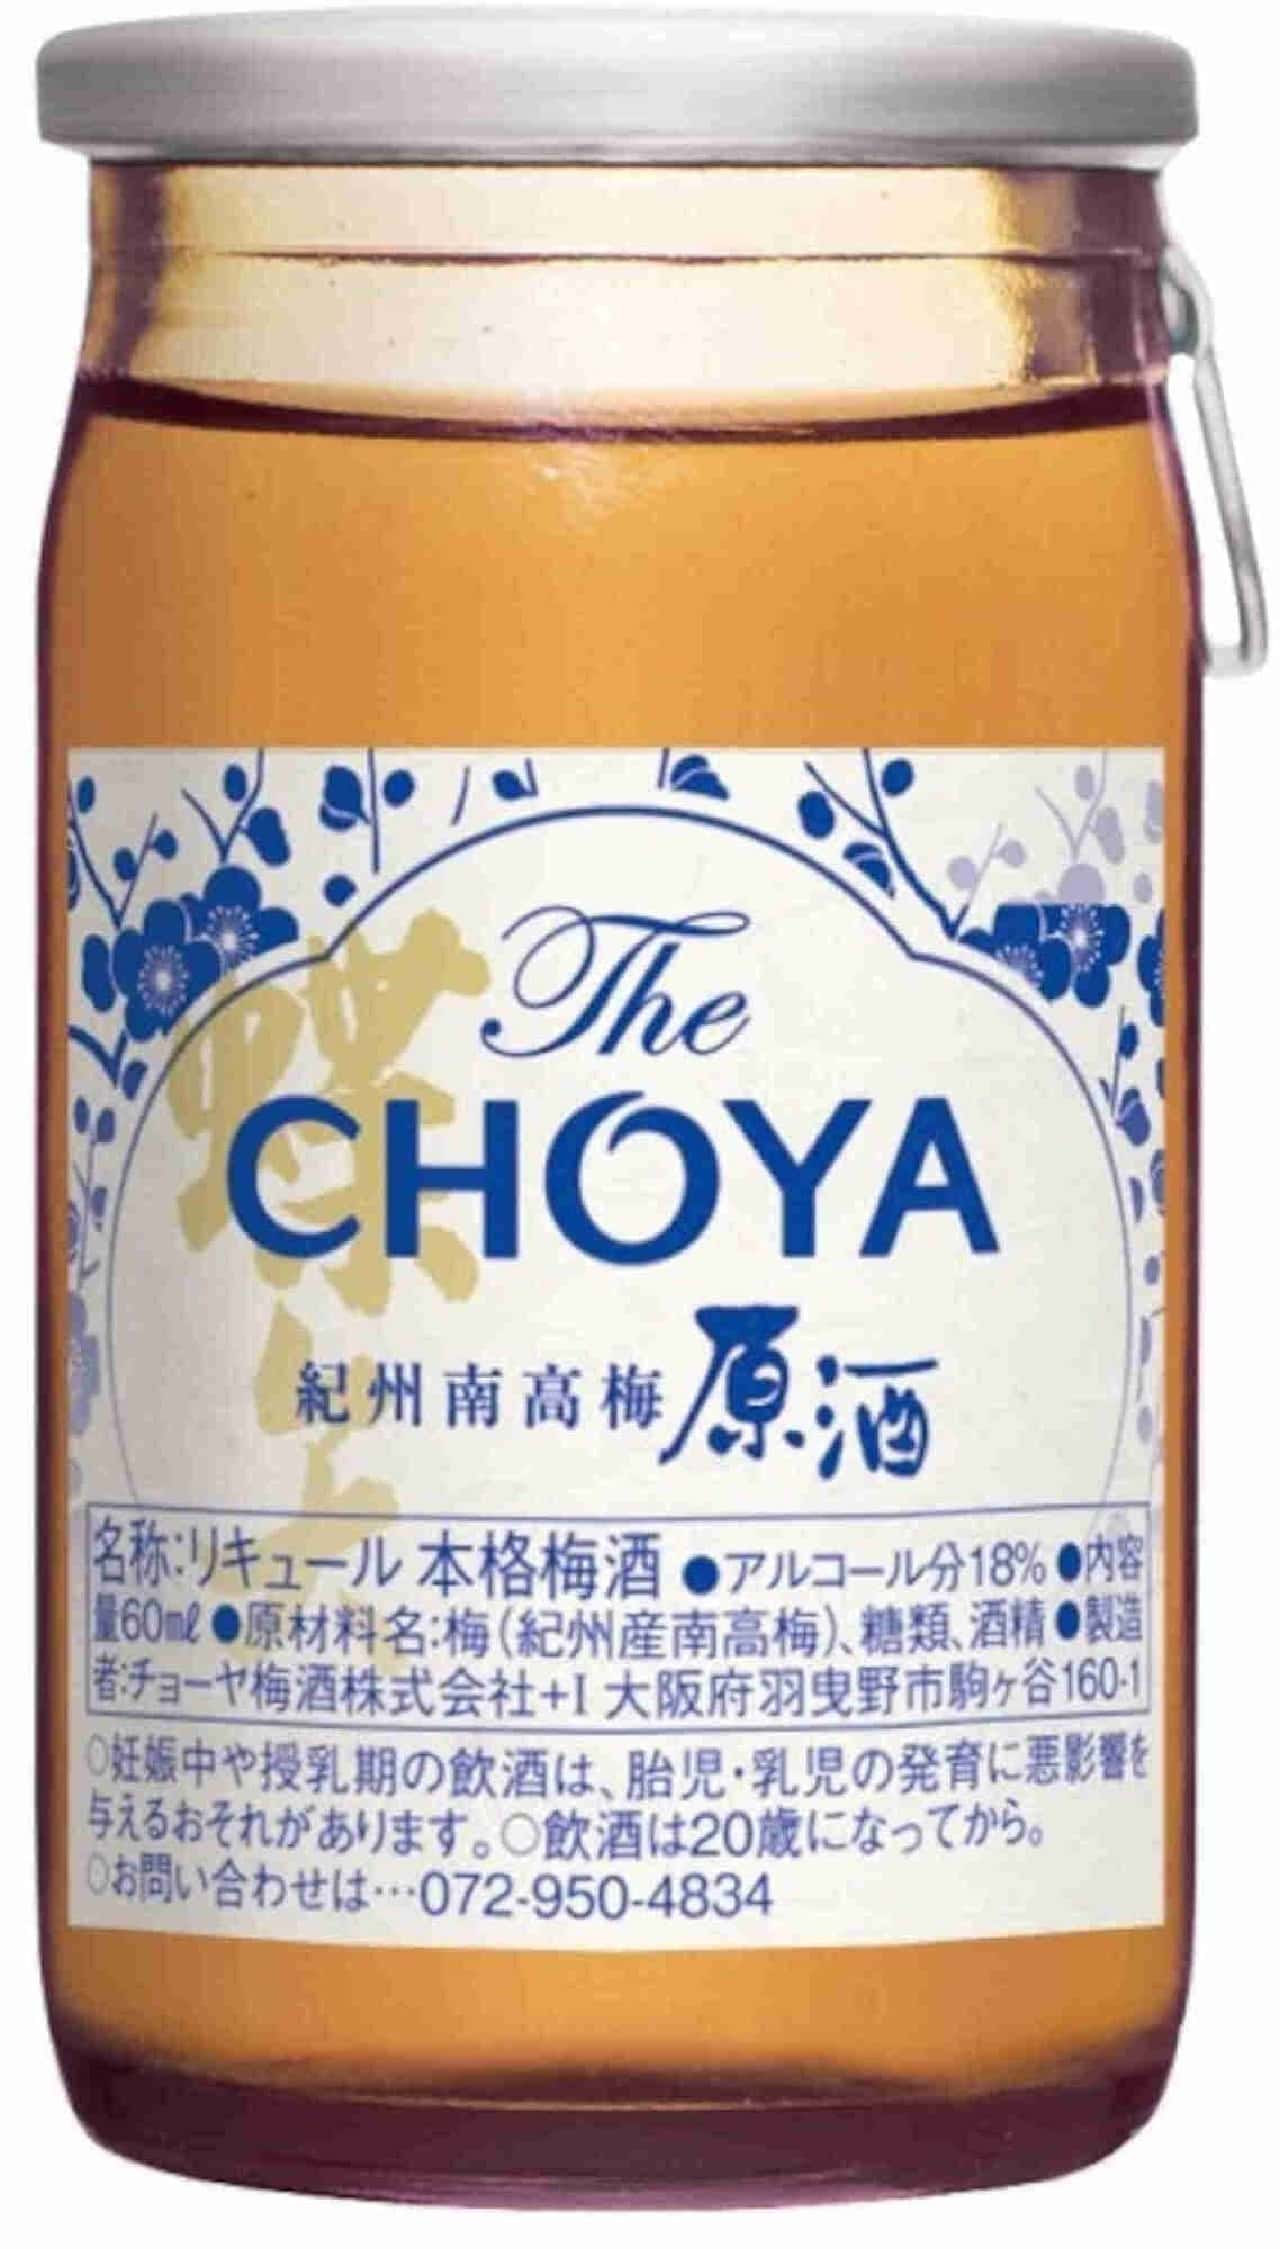 The CHOYA #利き梅酒セット